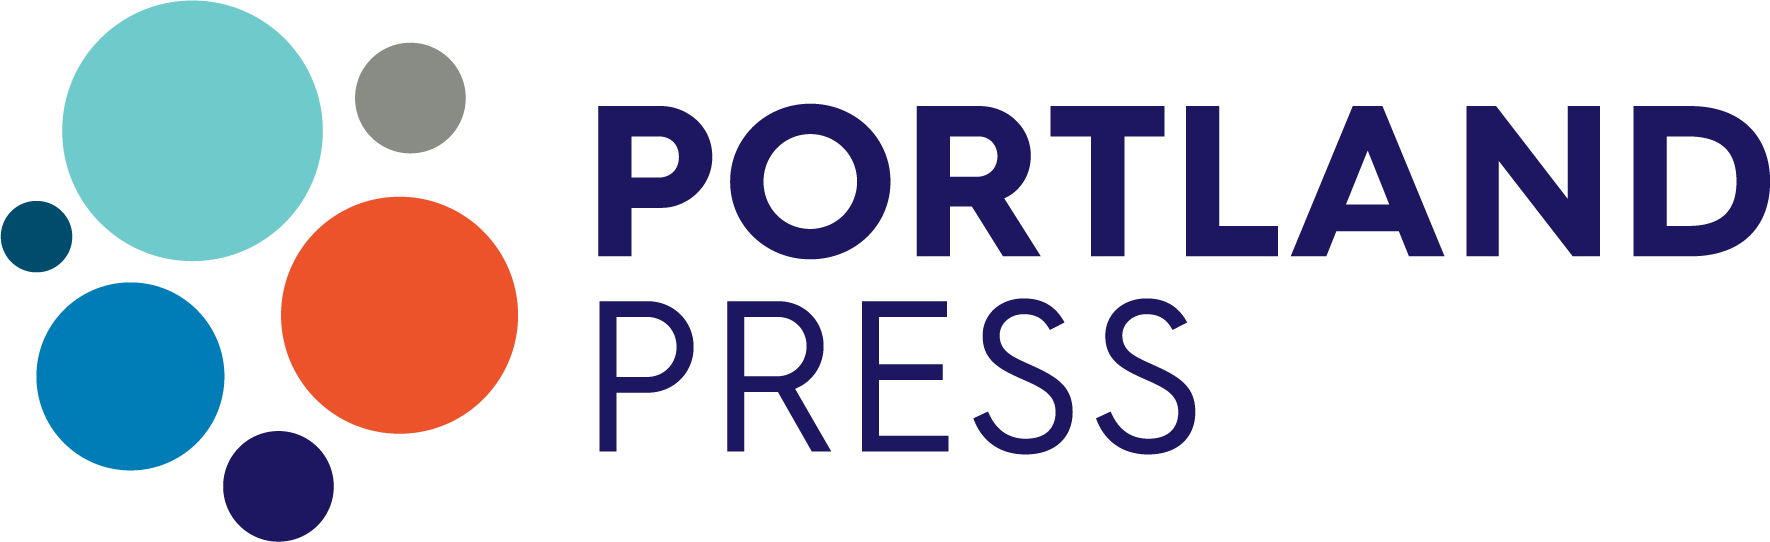 2018-04/portlandpress_logo.png